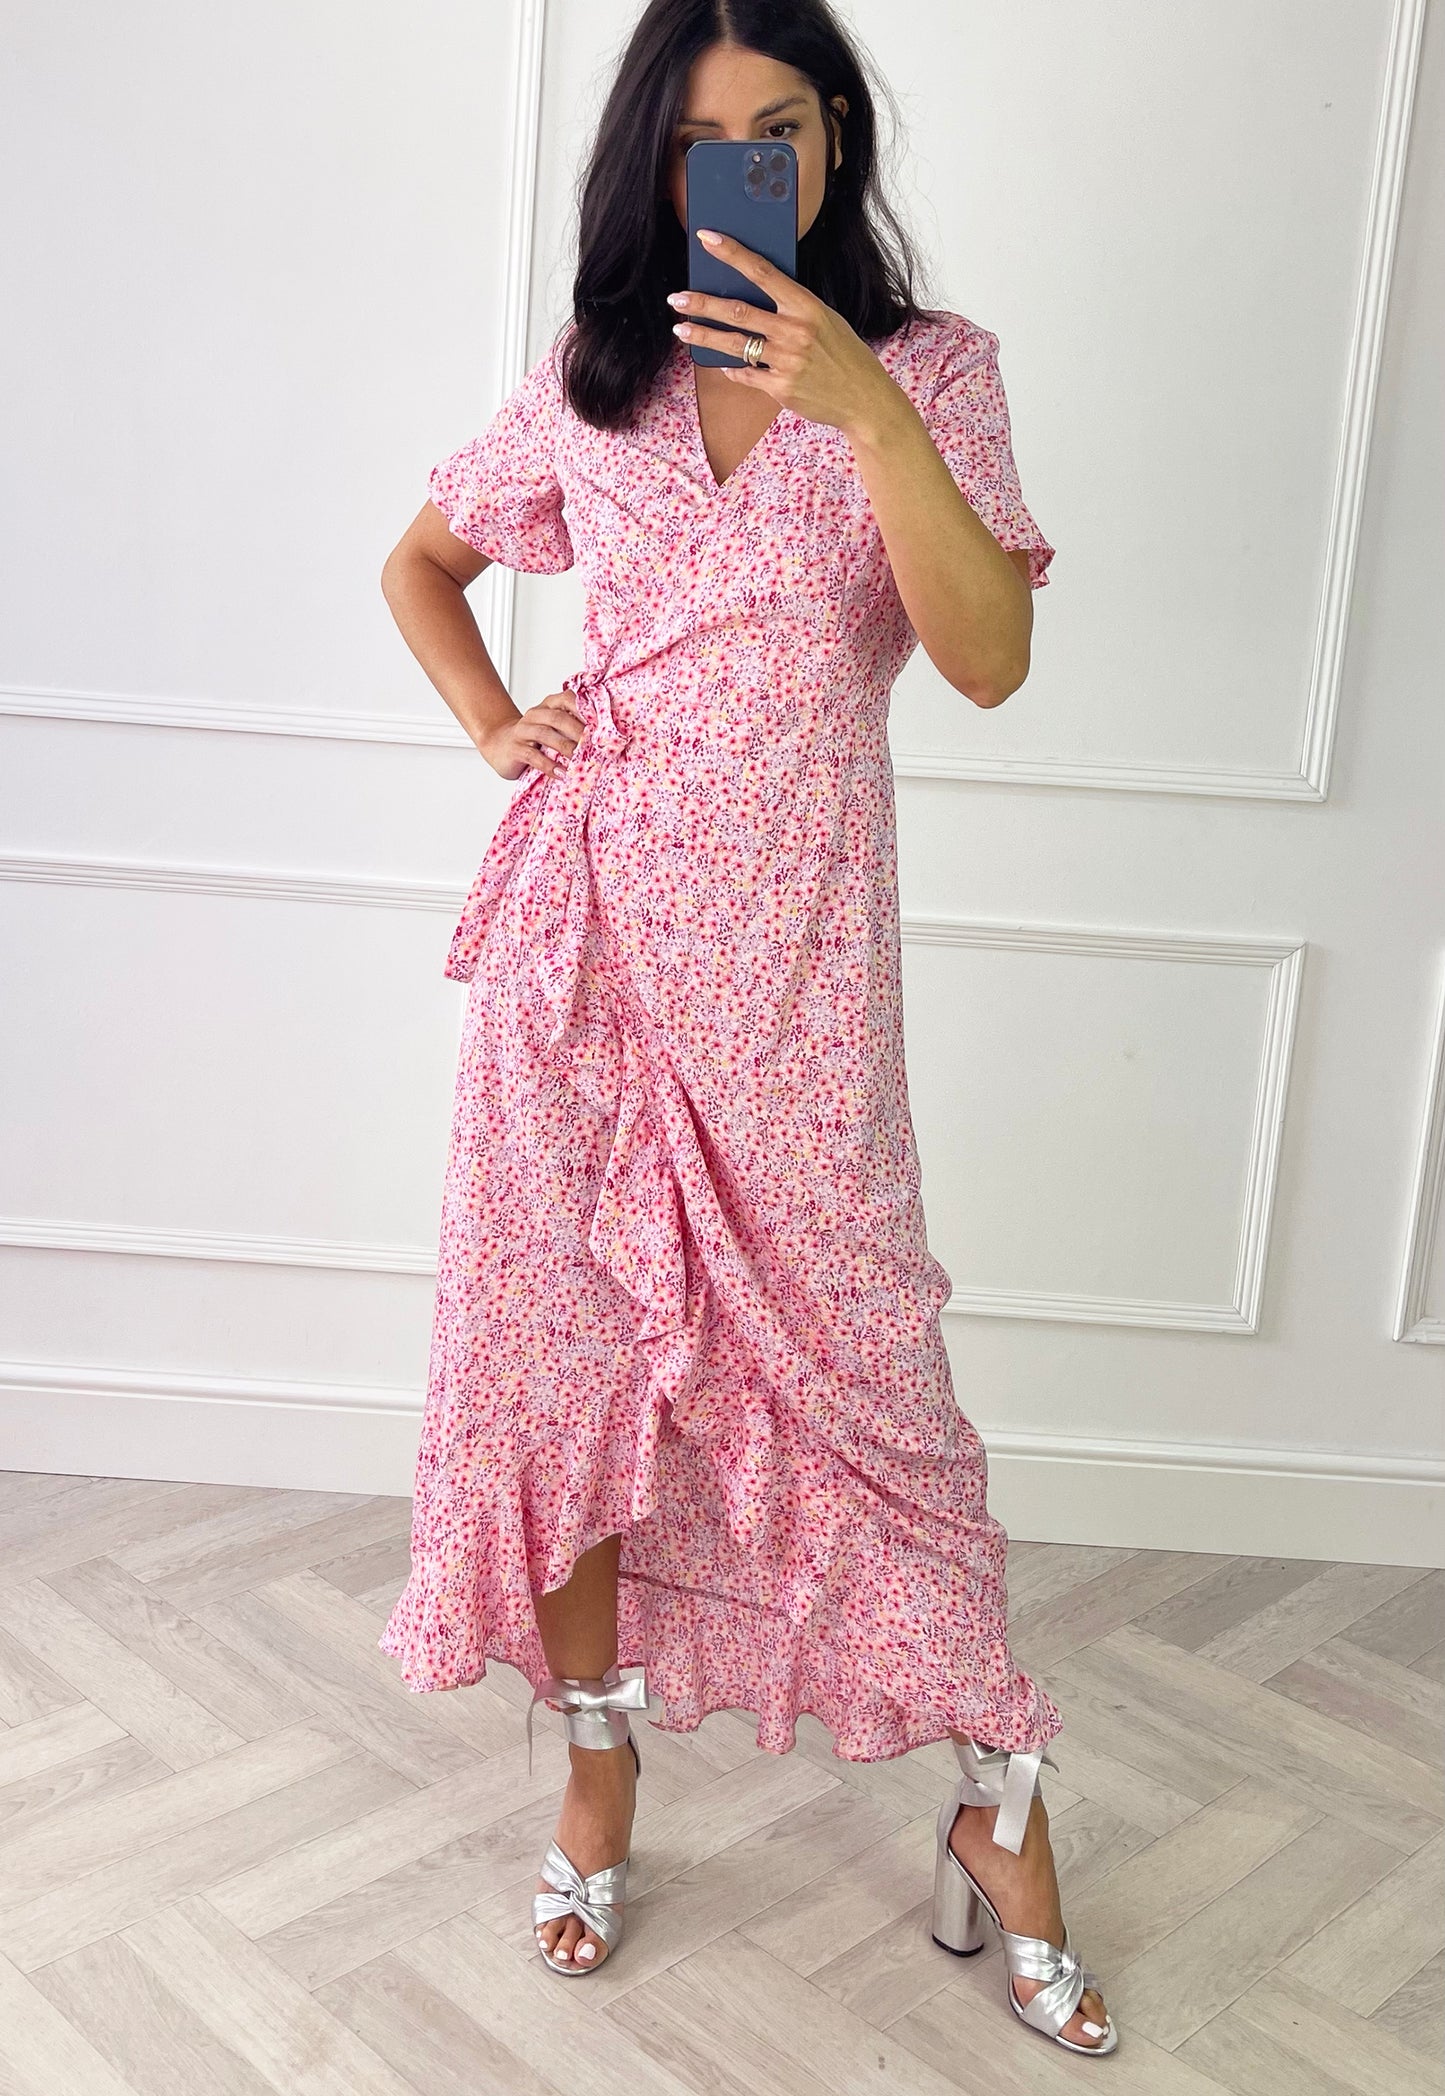 VERO MODA Henna Ditsy Floral Print Maxi Frill Wrap Dress in Pink - concretebartops